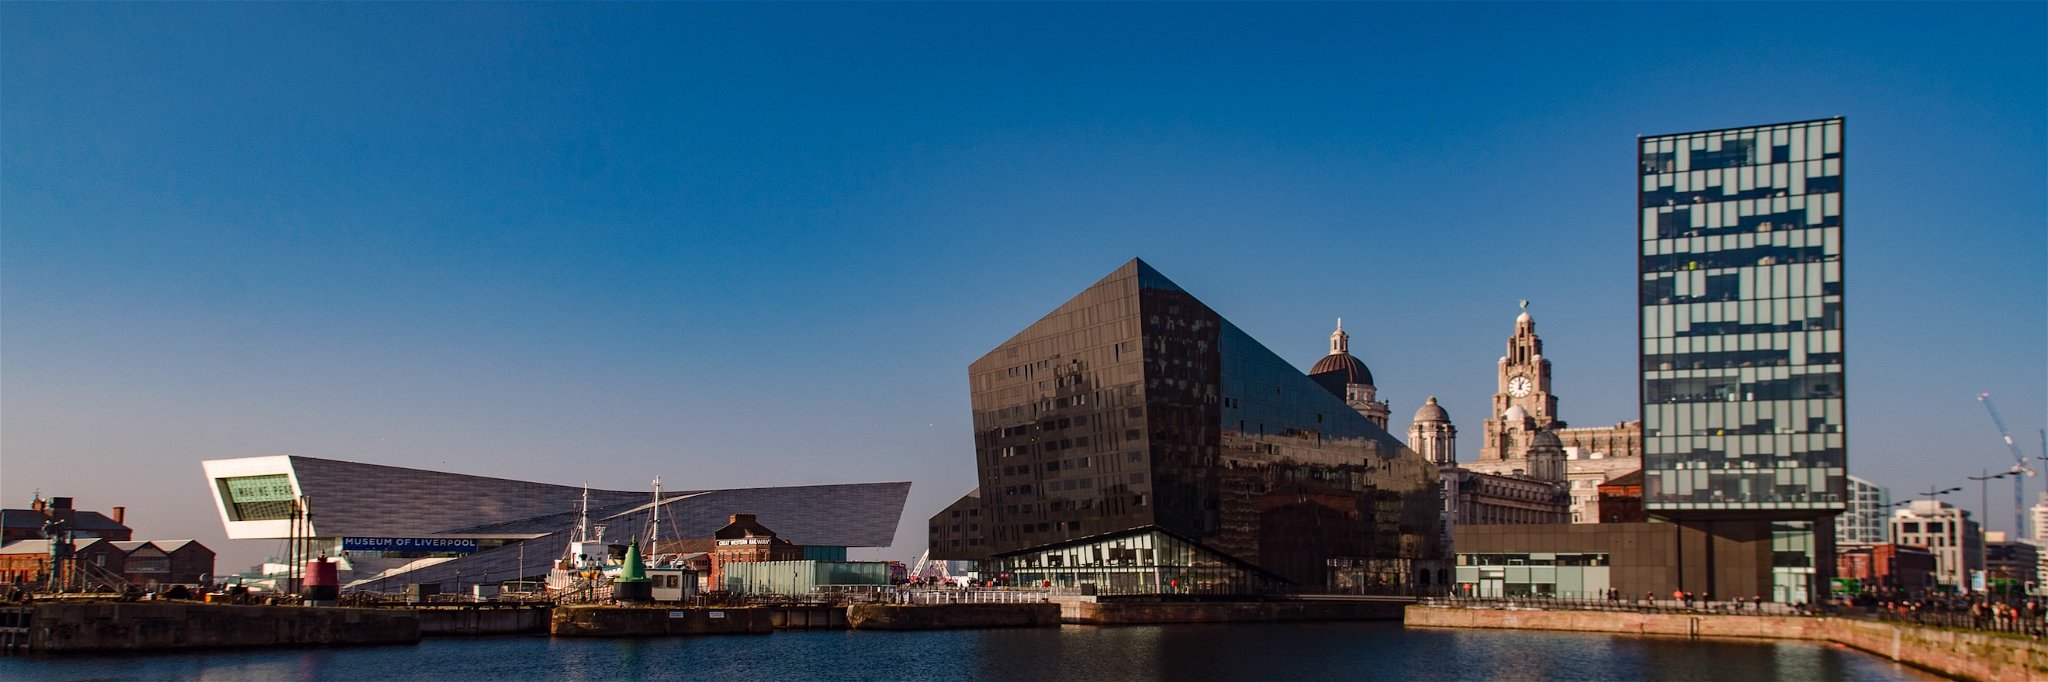 UNESCO Strips Liverpool of Its World Heritage Status